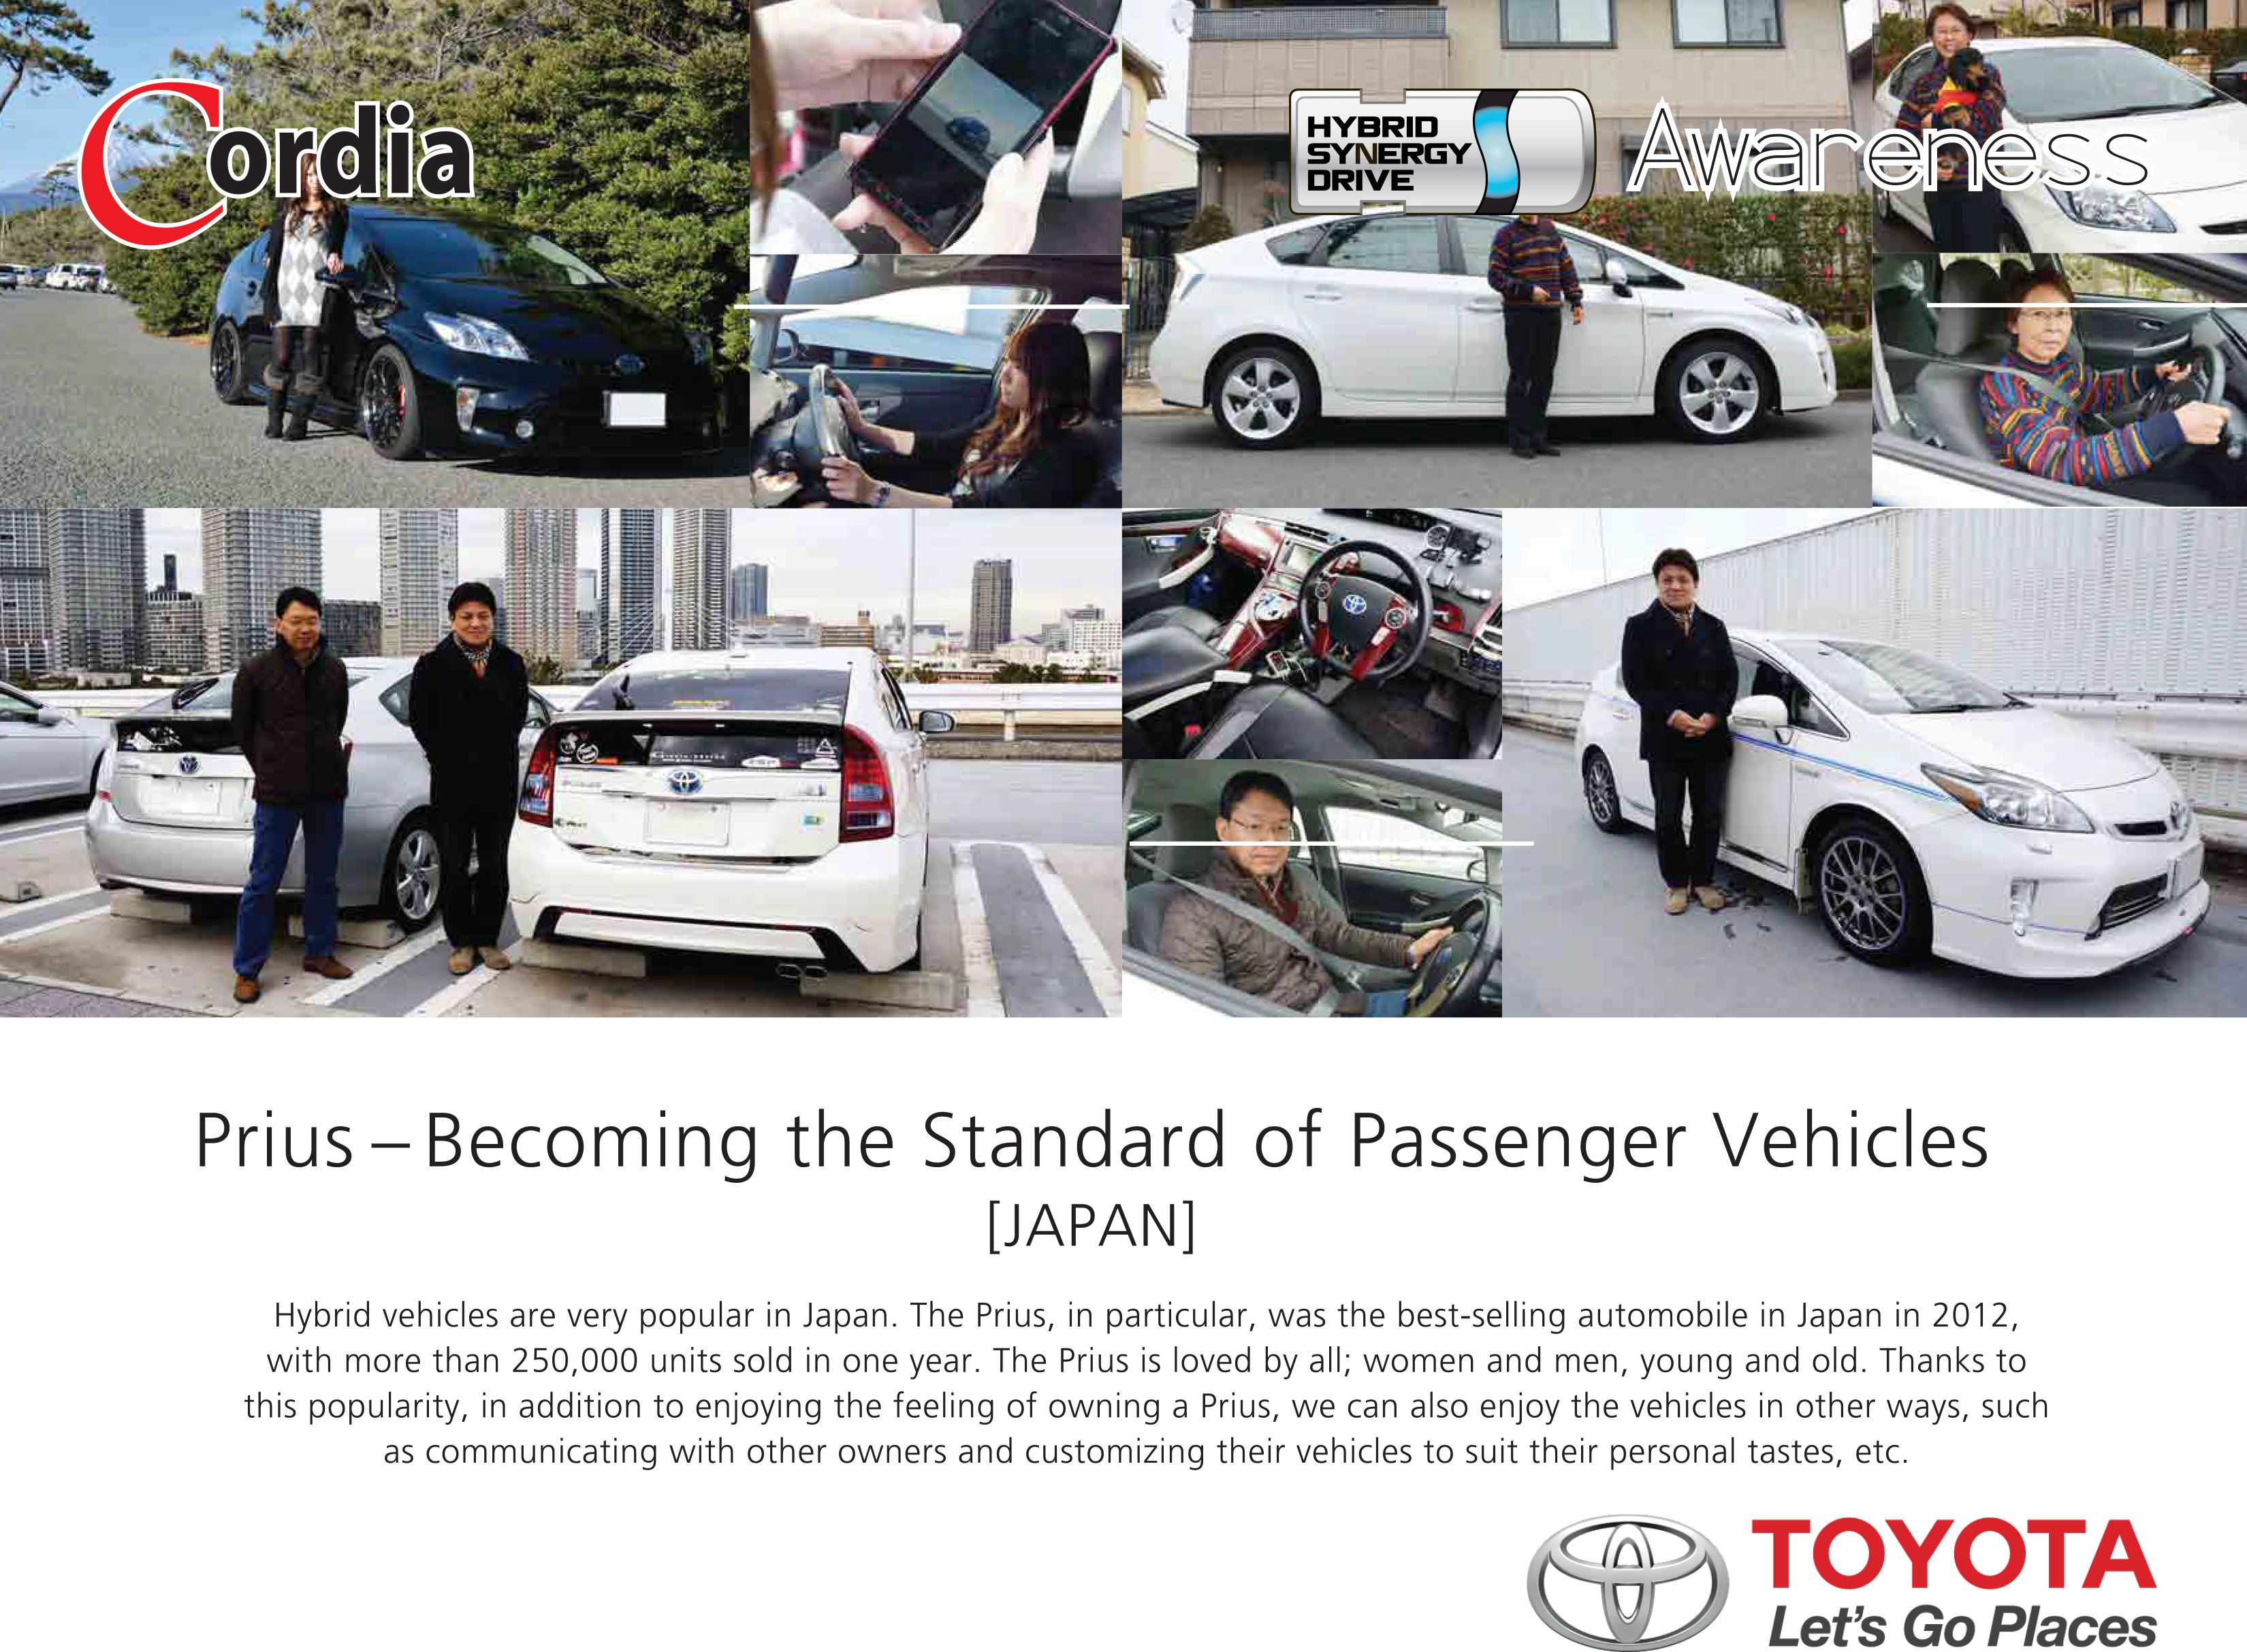 Prius - Becoming the Standard of Passenger Vehicles (Japan) - Hybrid Awareness